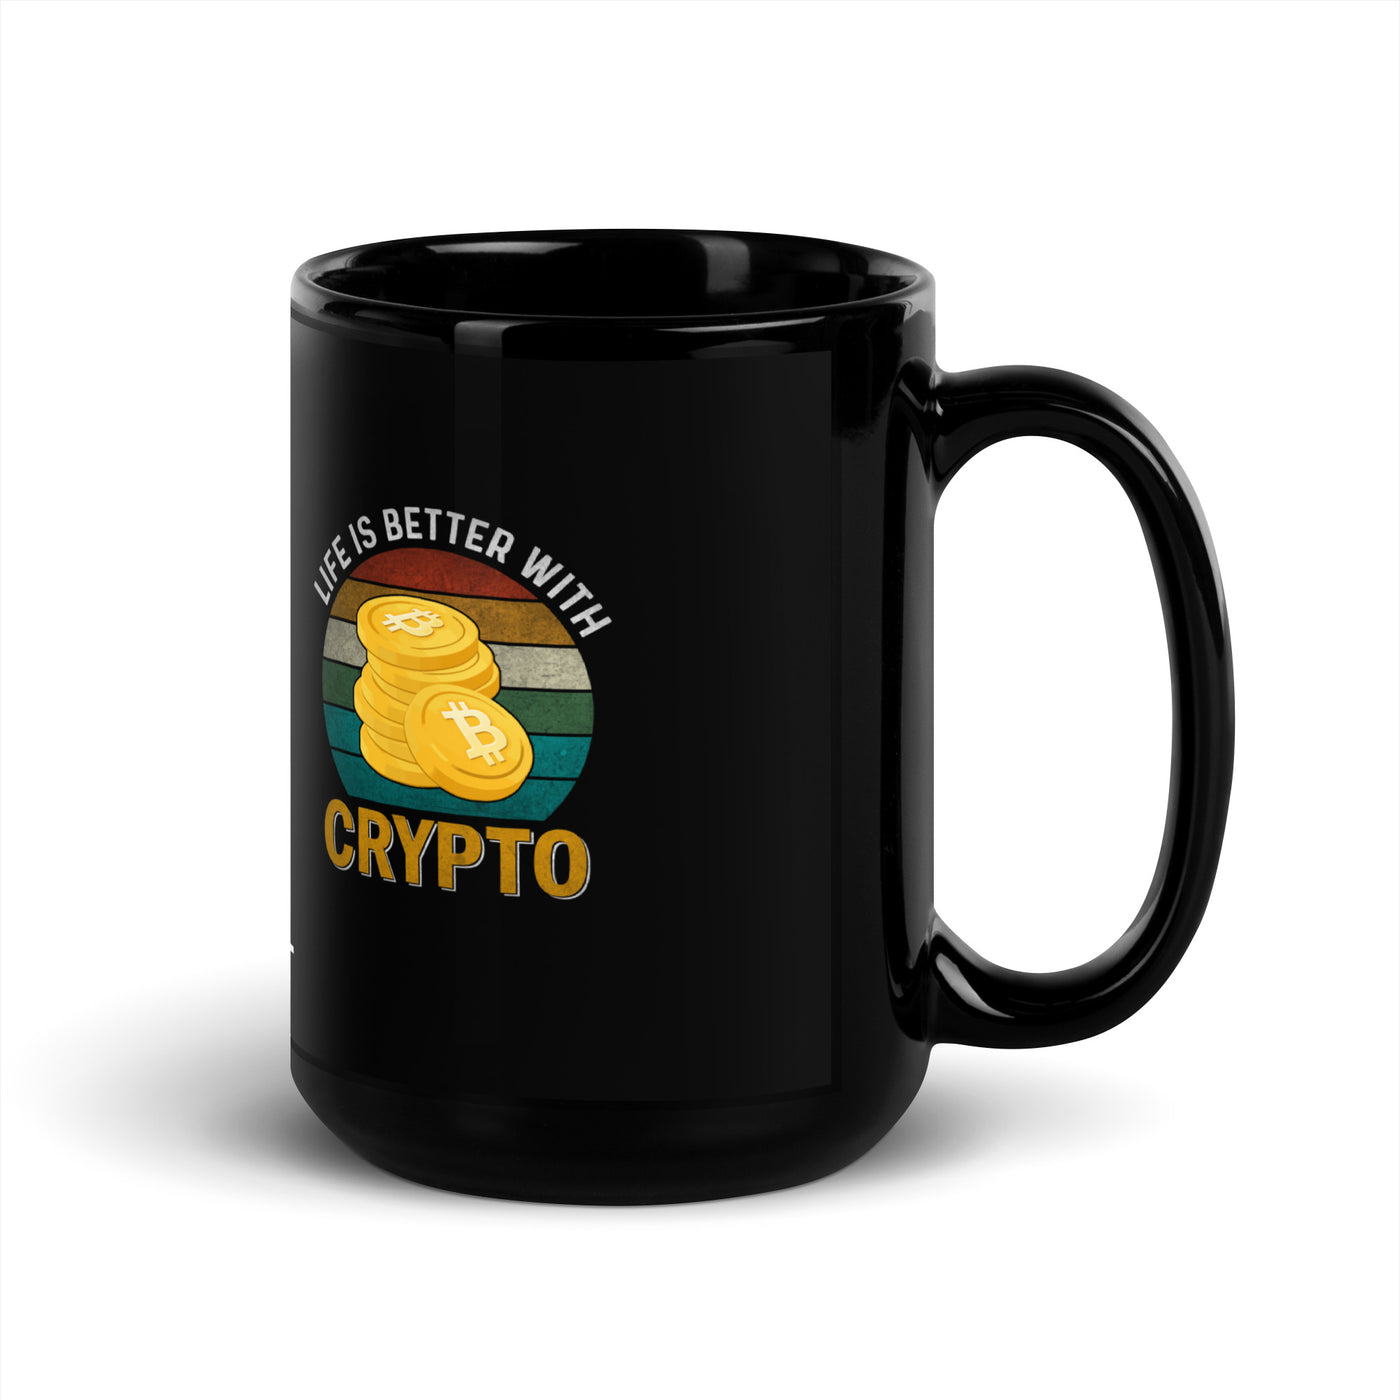 Life is Better with Bitcoin - Black Glossy Mug